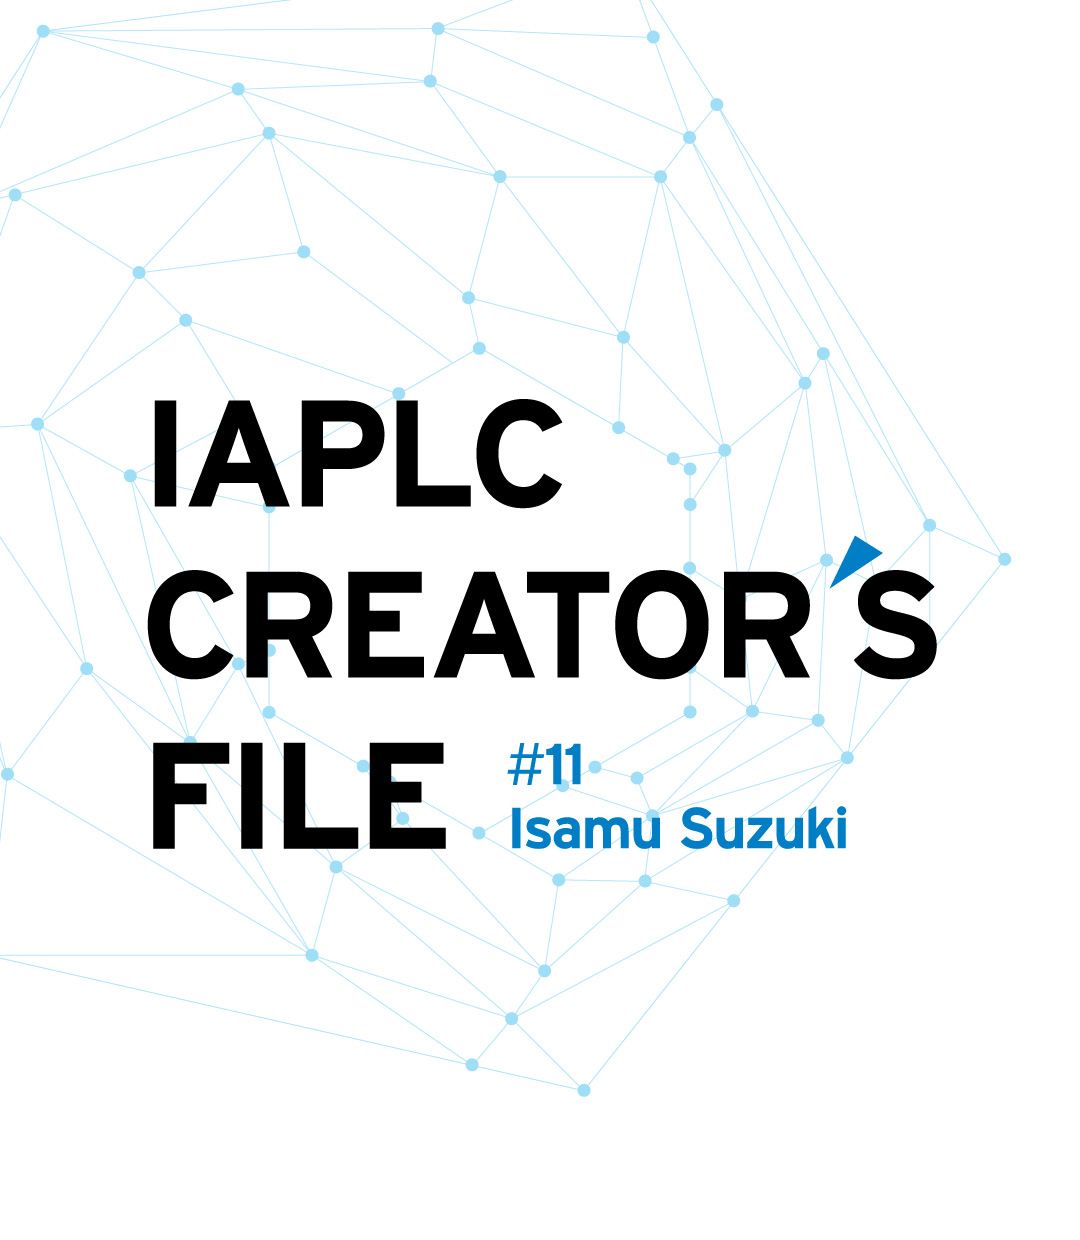 IAPLC CREATOR’S FILE #11 Isamu Suzuki